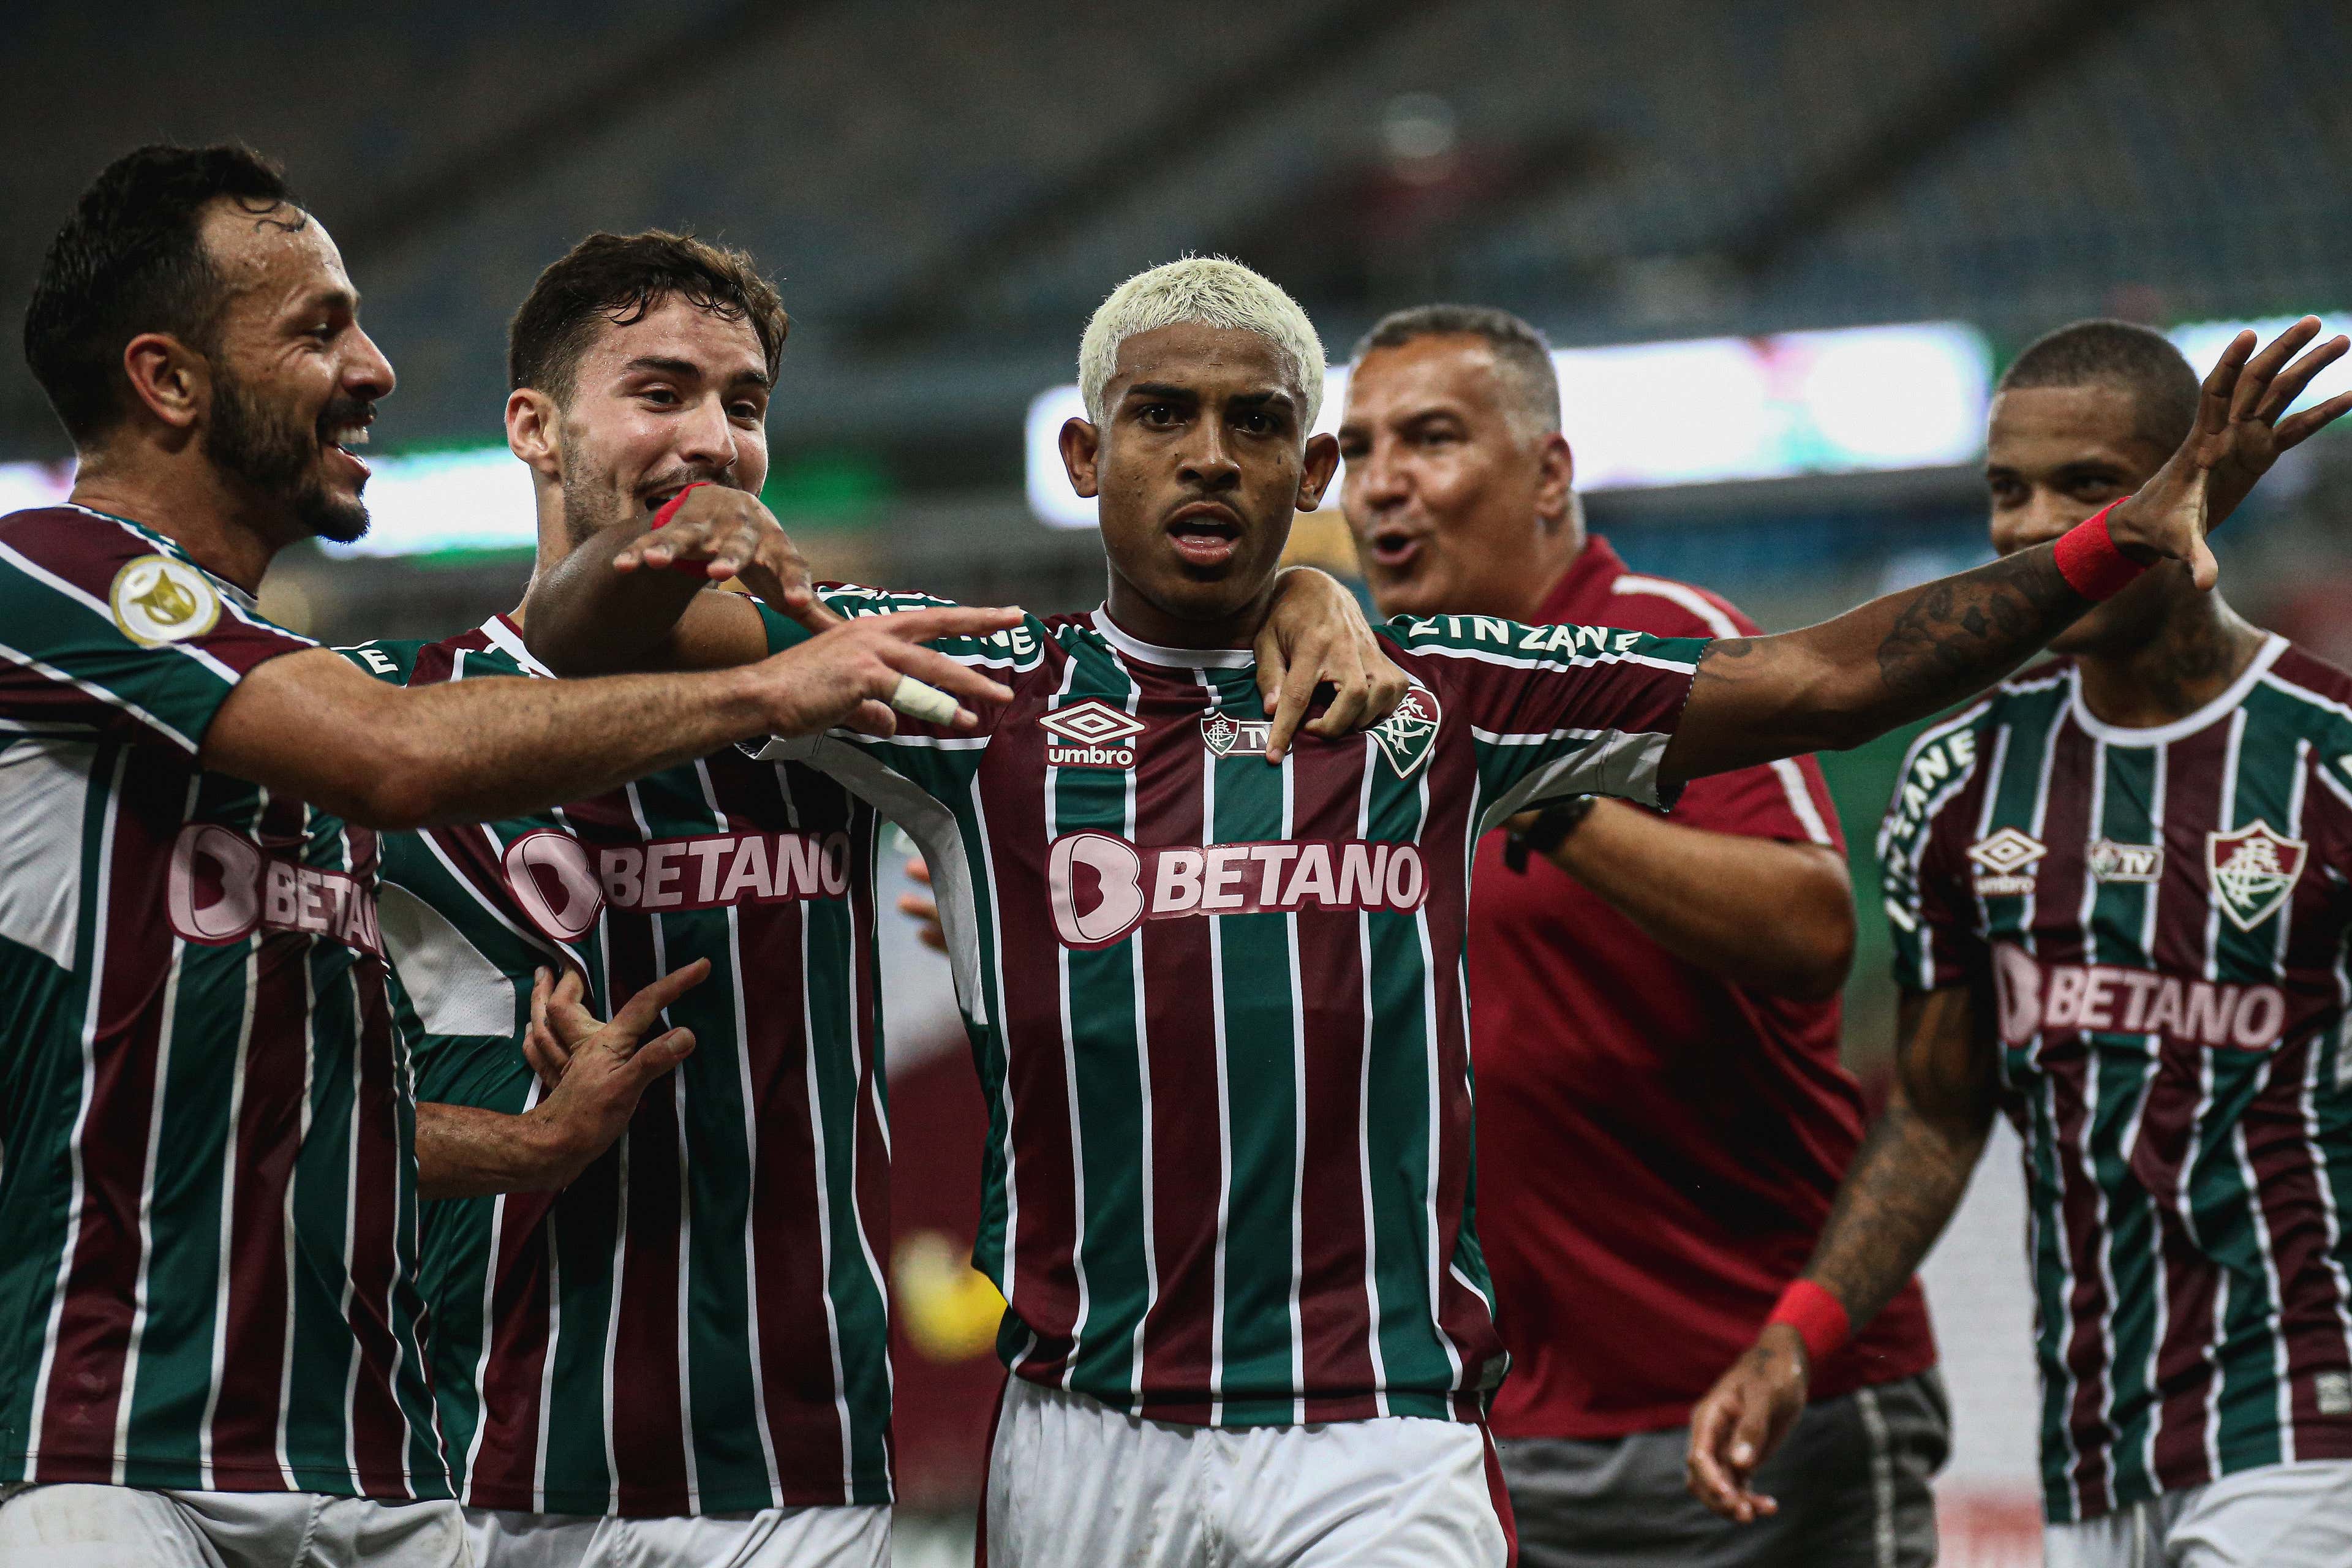 Próximos jogos do Flamengo: Fluminense, Bragantino e América-MG